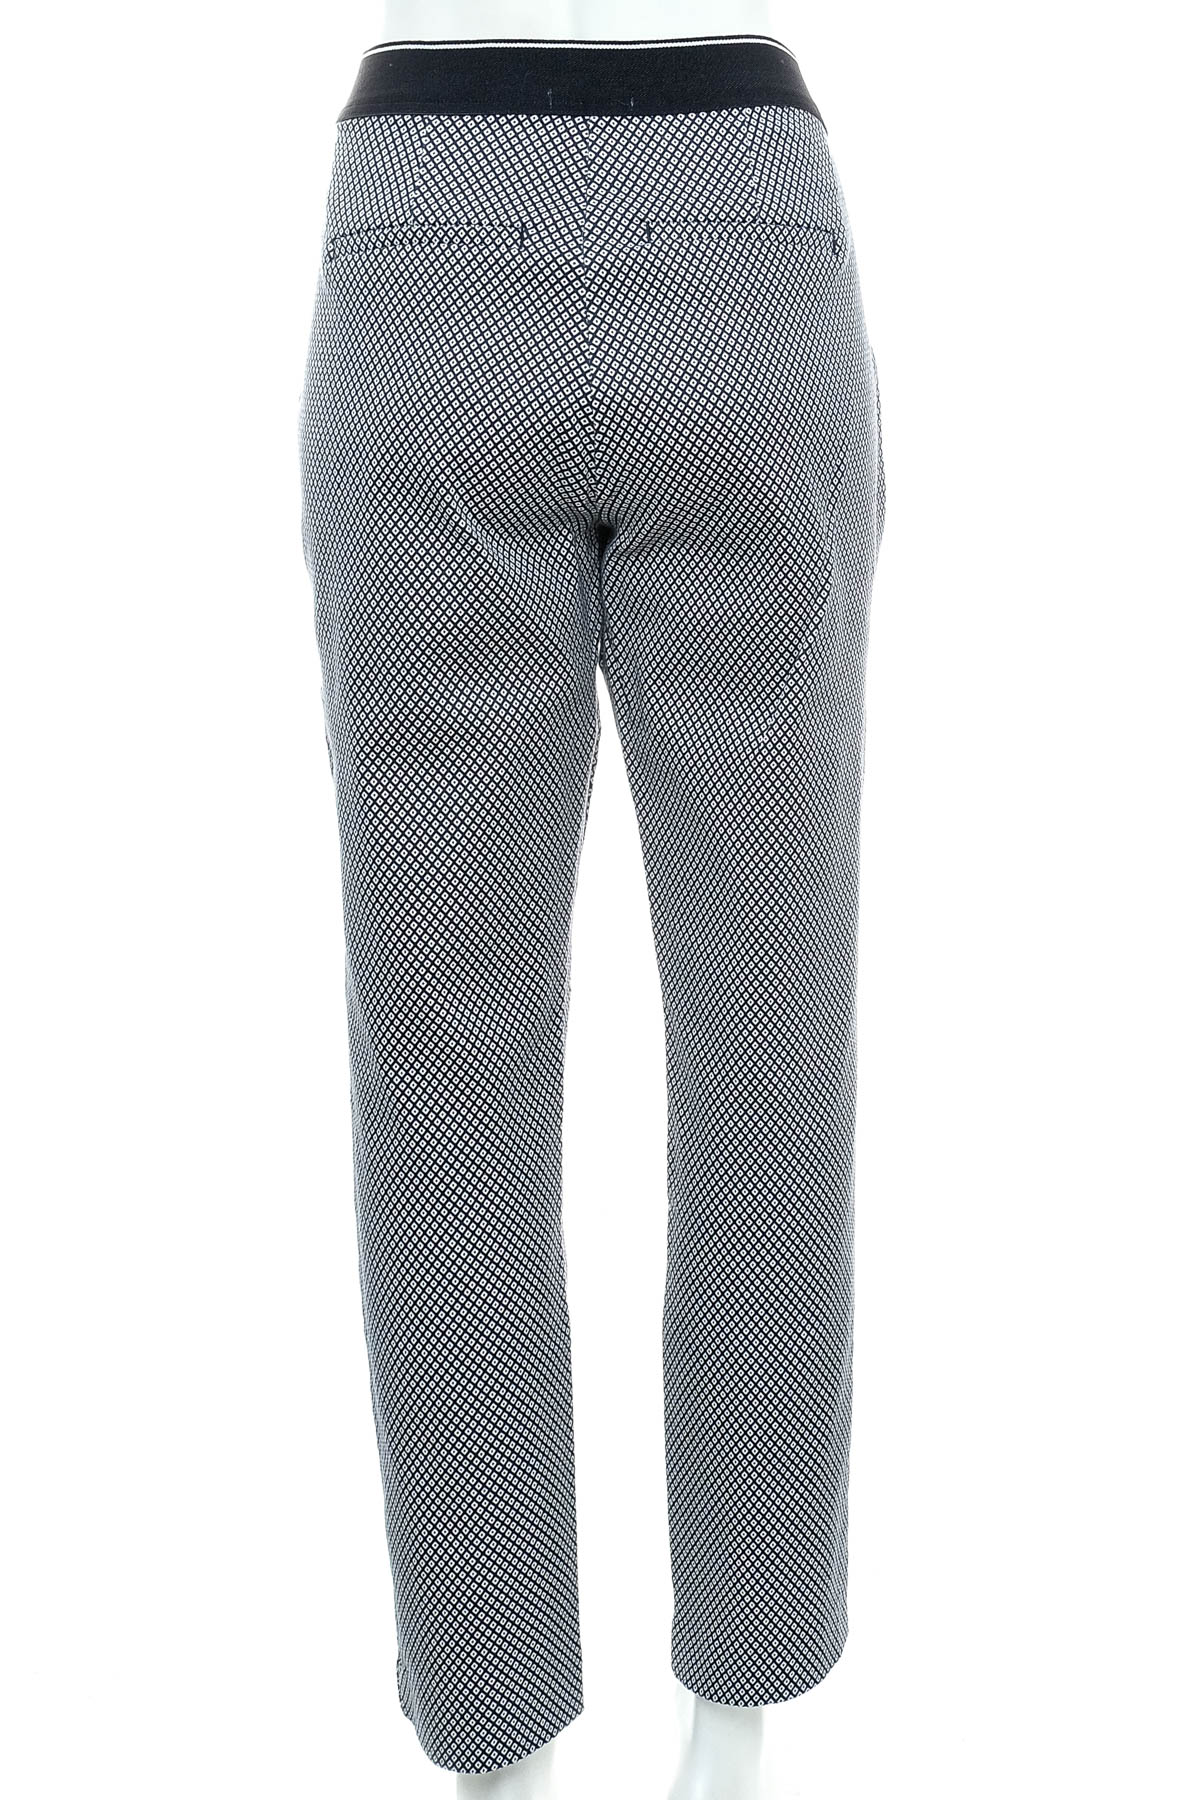 Women's trousers - Orsay - 1